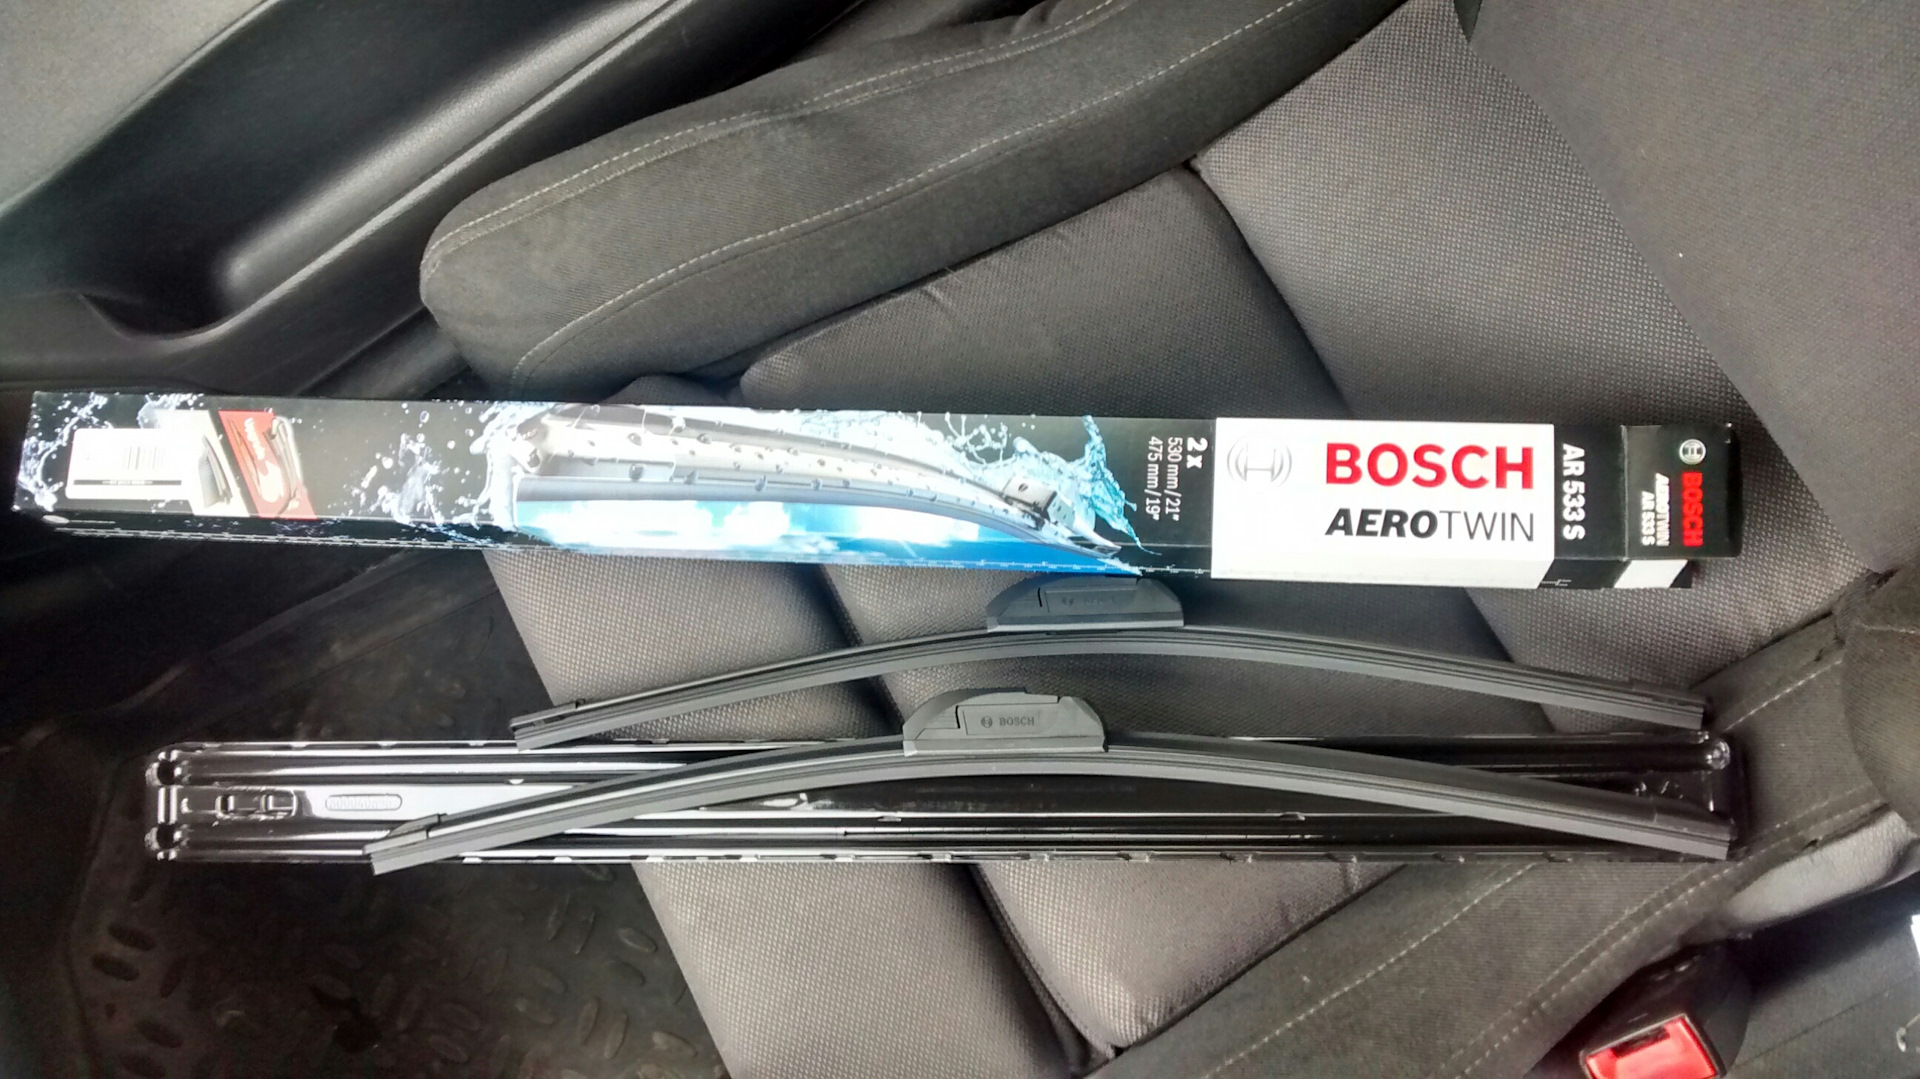 Bosch aerotwin 650